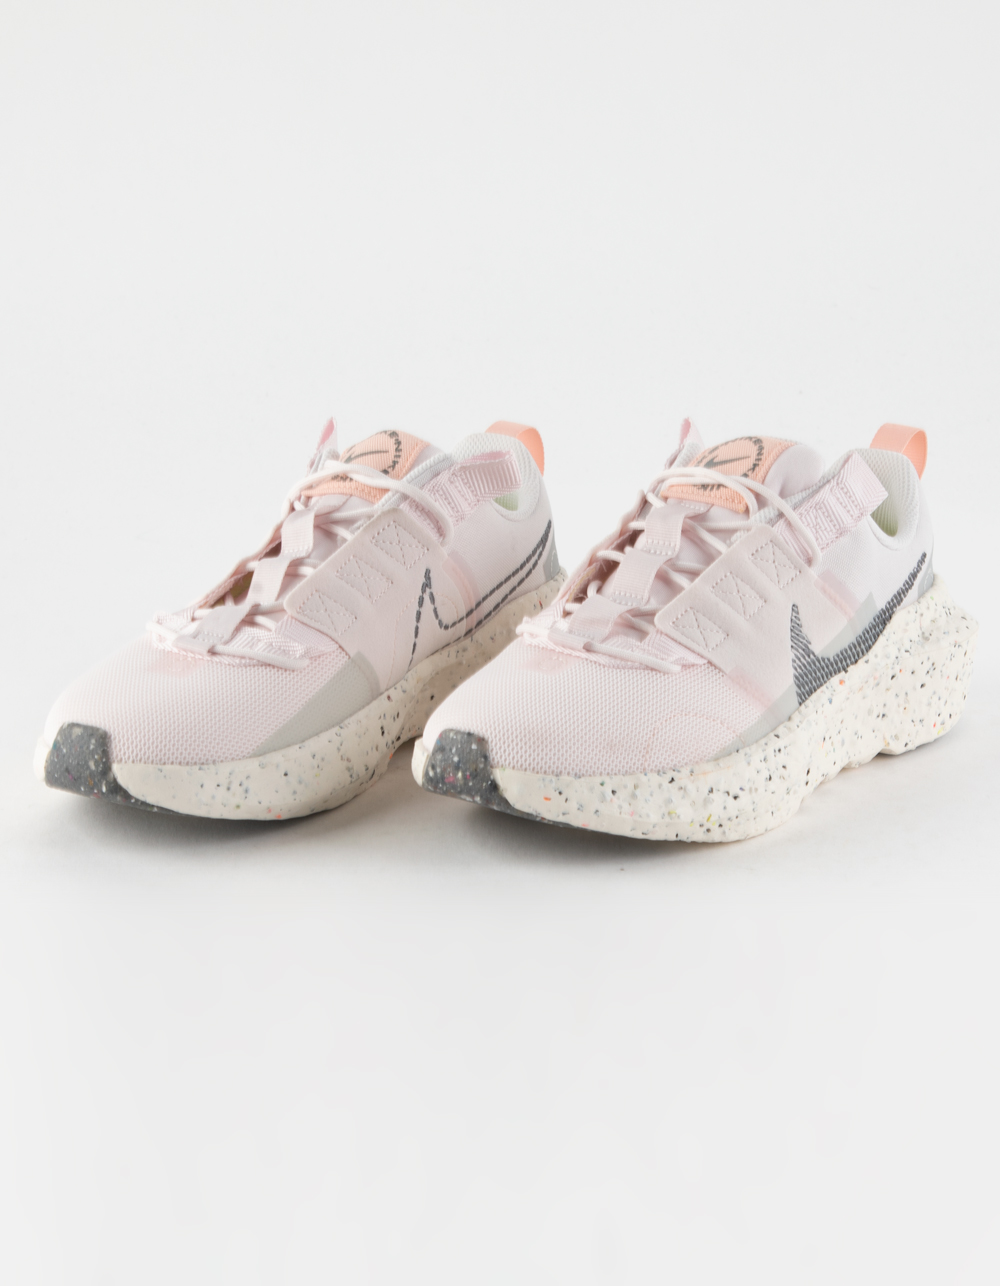 Nike Crater Impact Light Soft Pink (Women's)